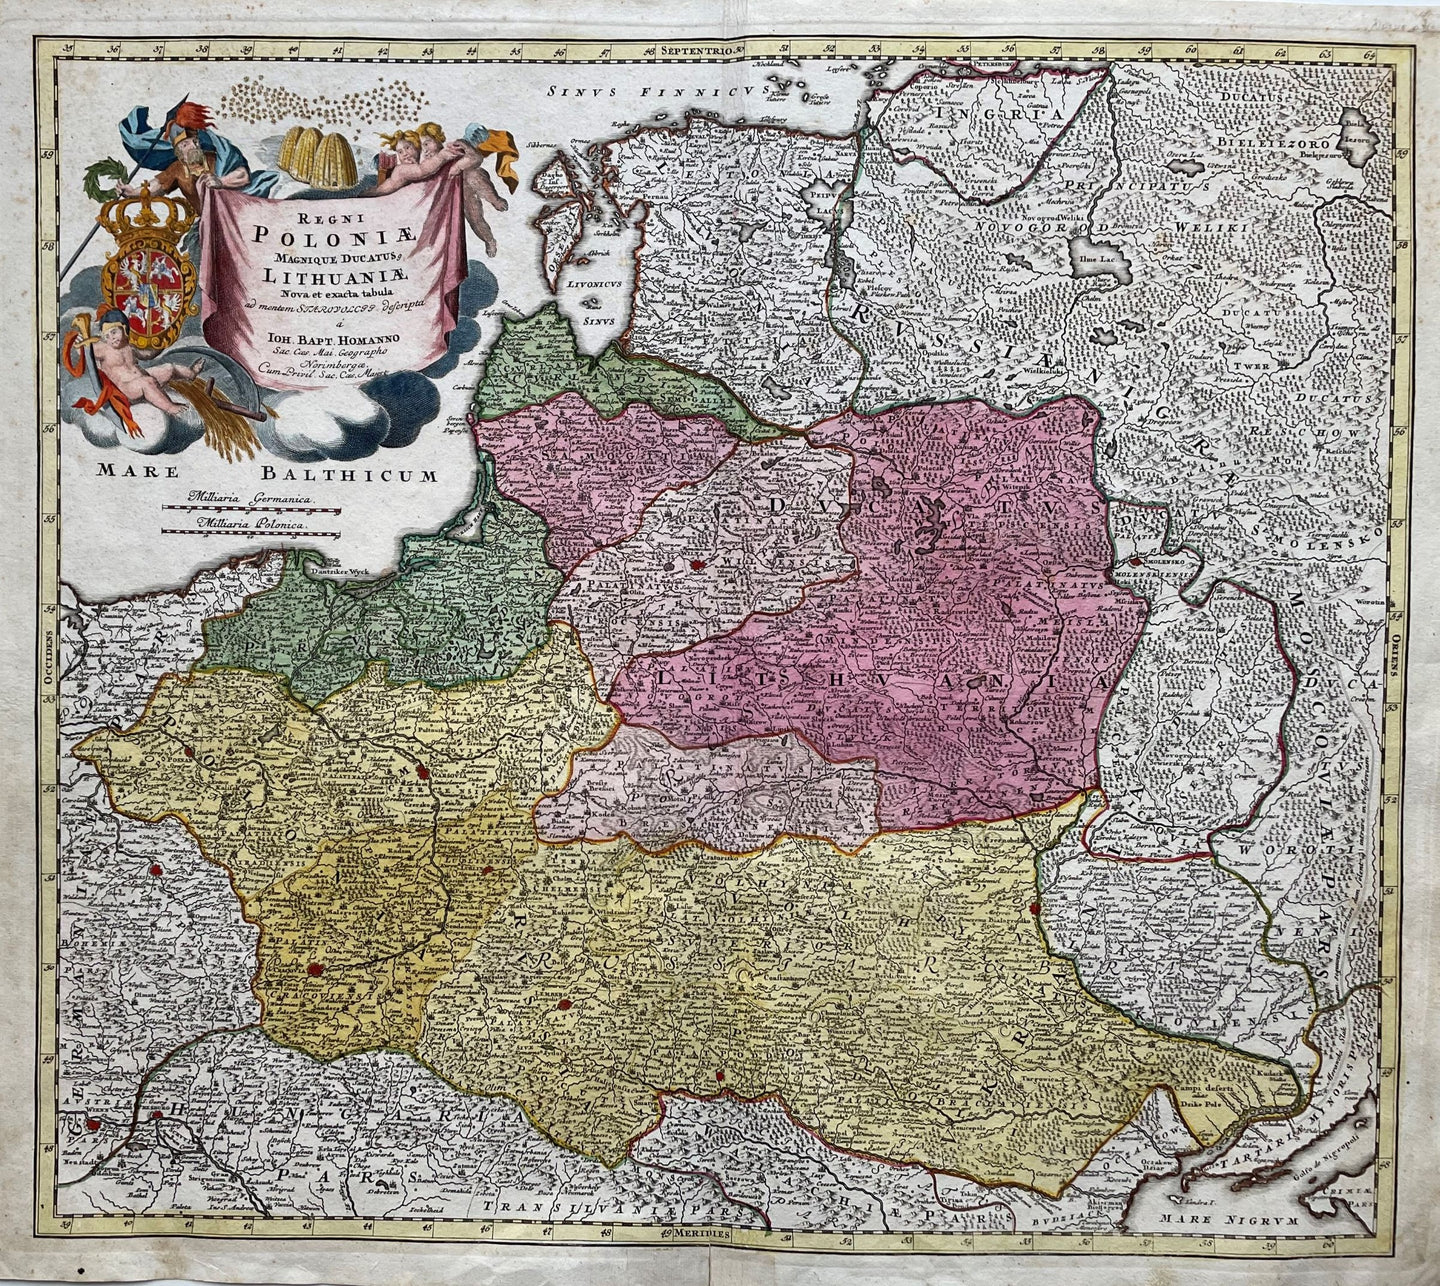 Polen Litouwen Belarus Poland Lithuania - JB Homann - circa 1720